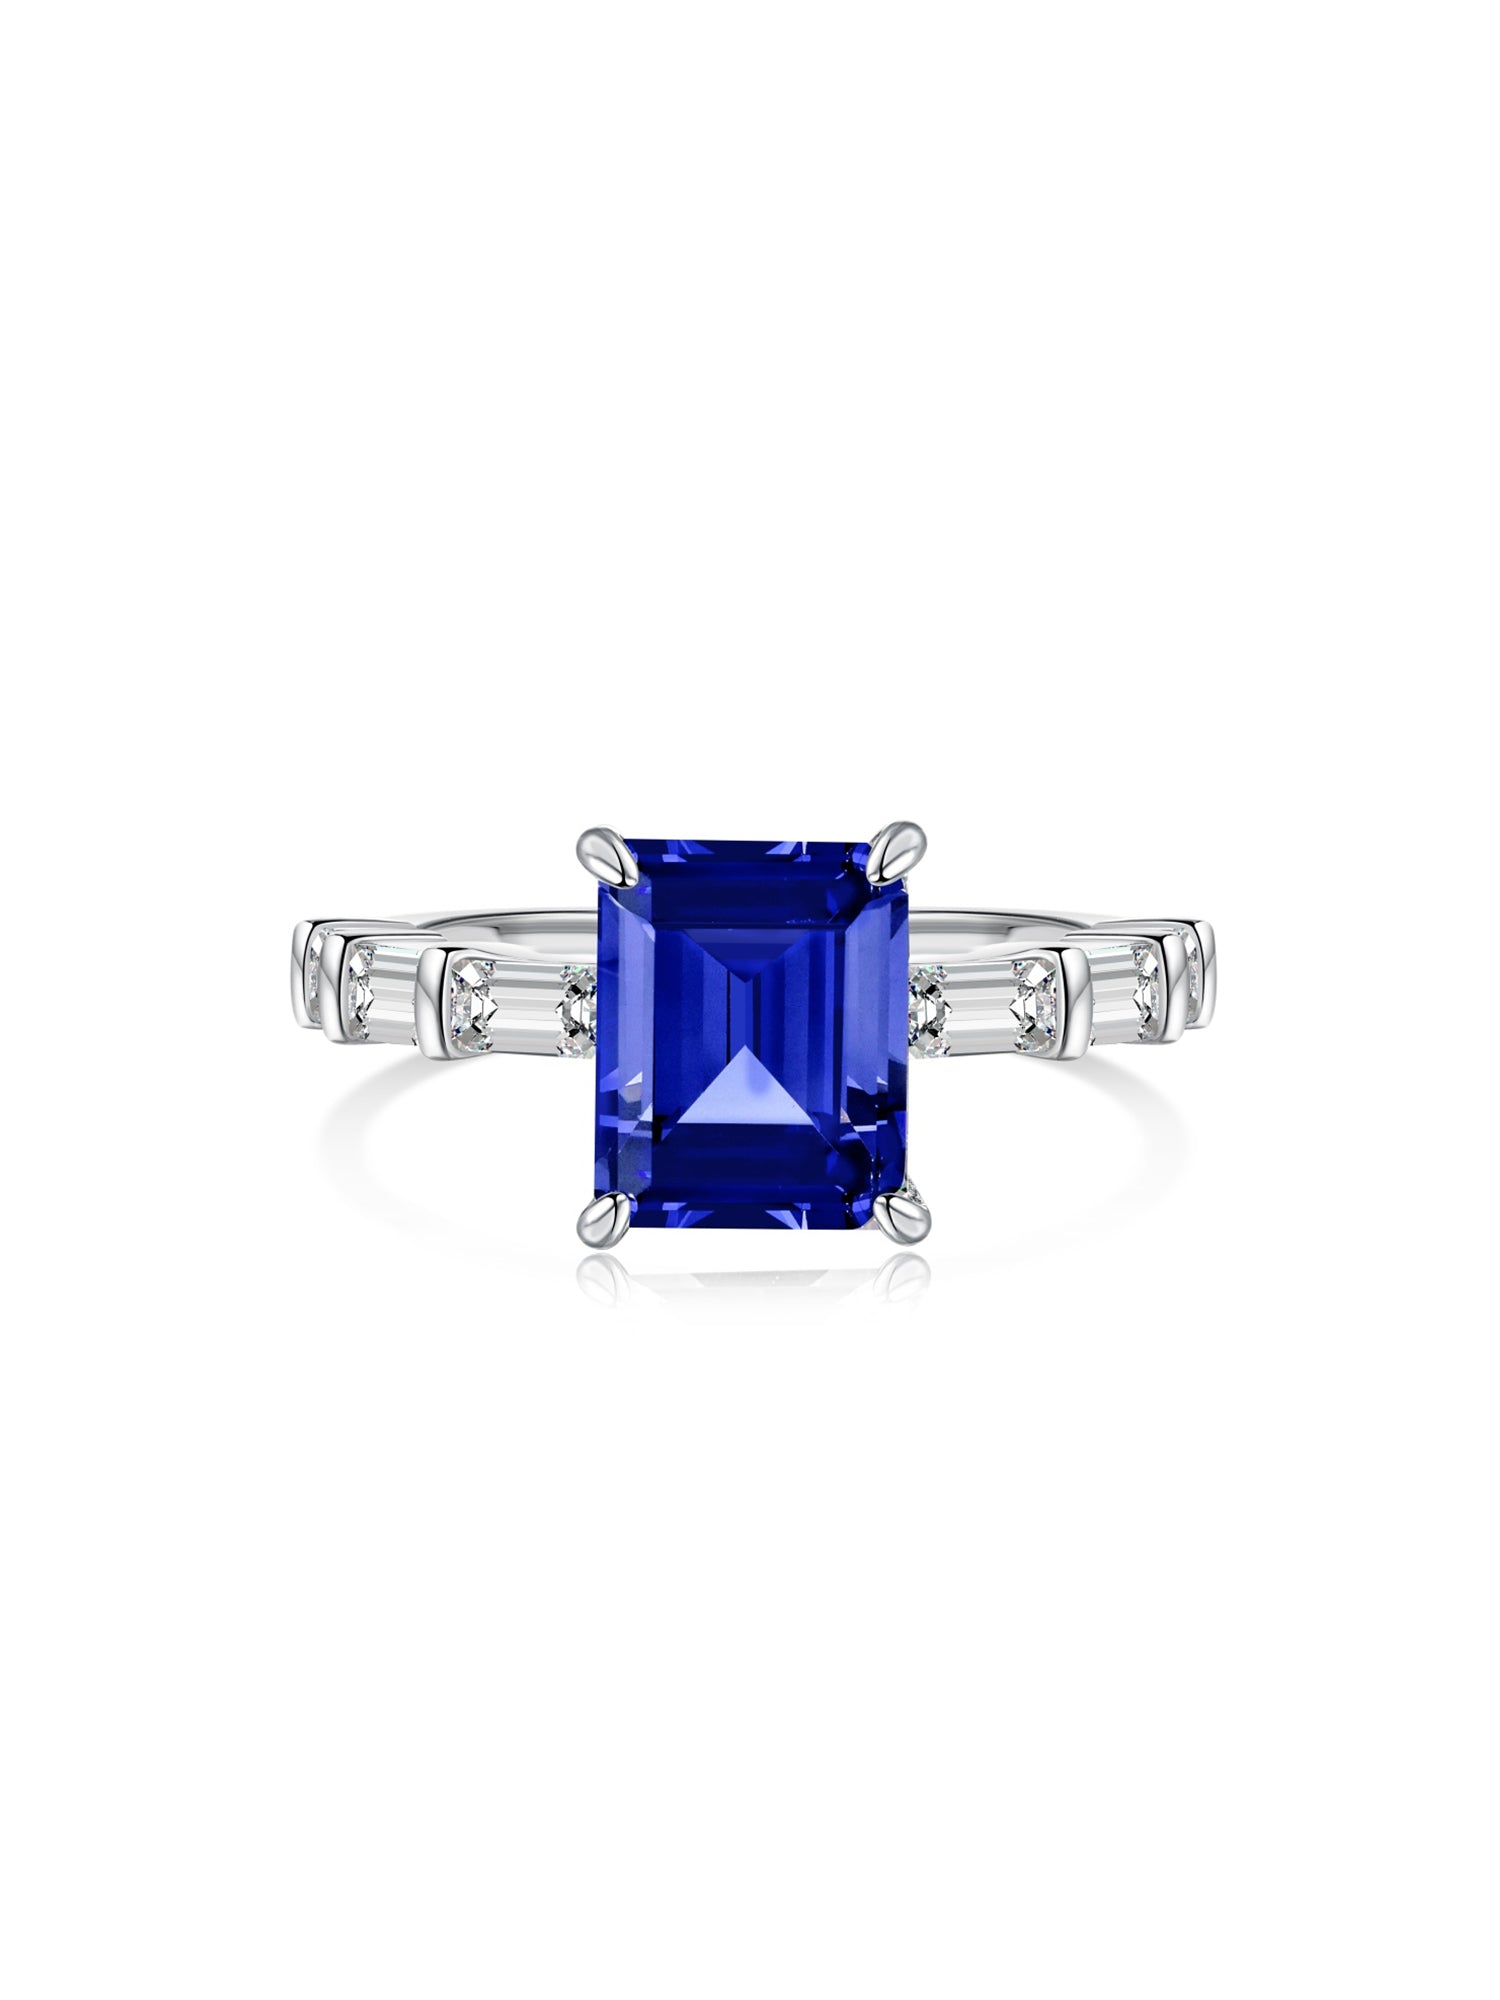 4 Carat Rectangle Sapphire Engagement Ring